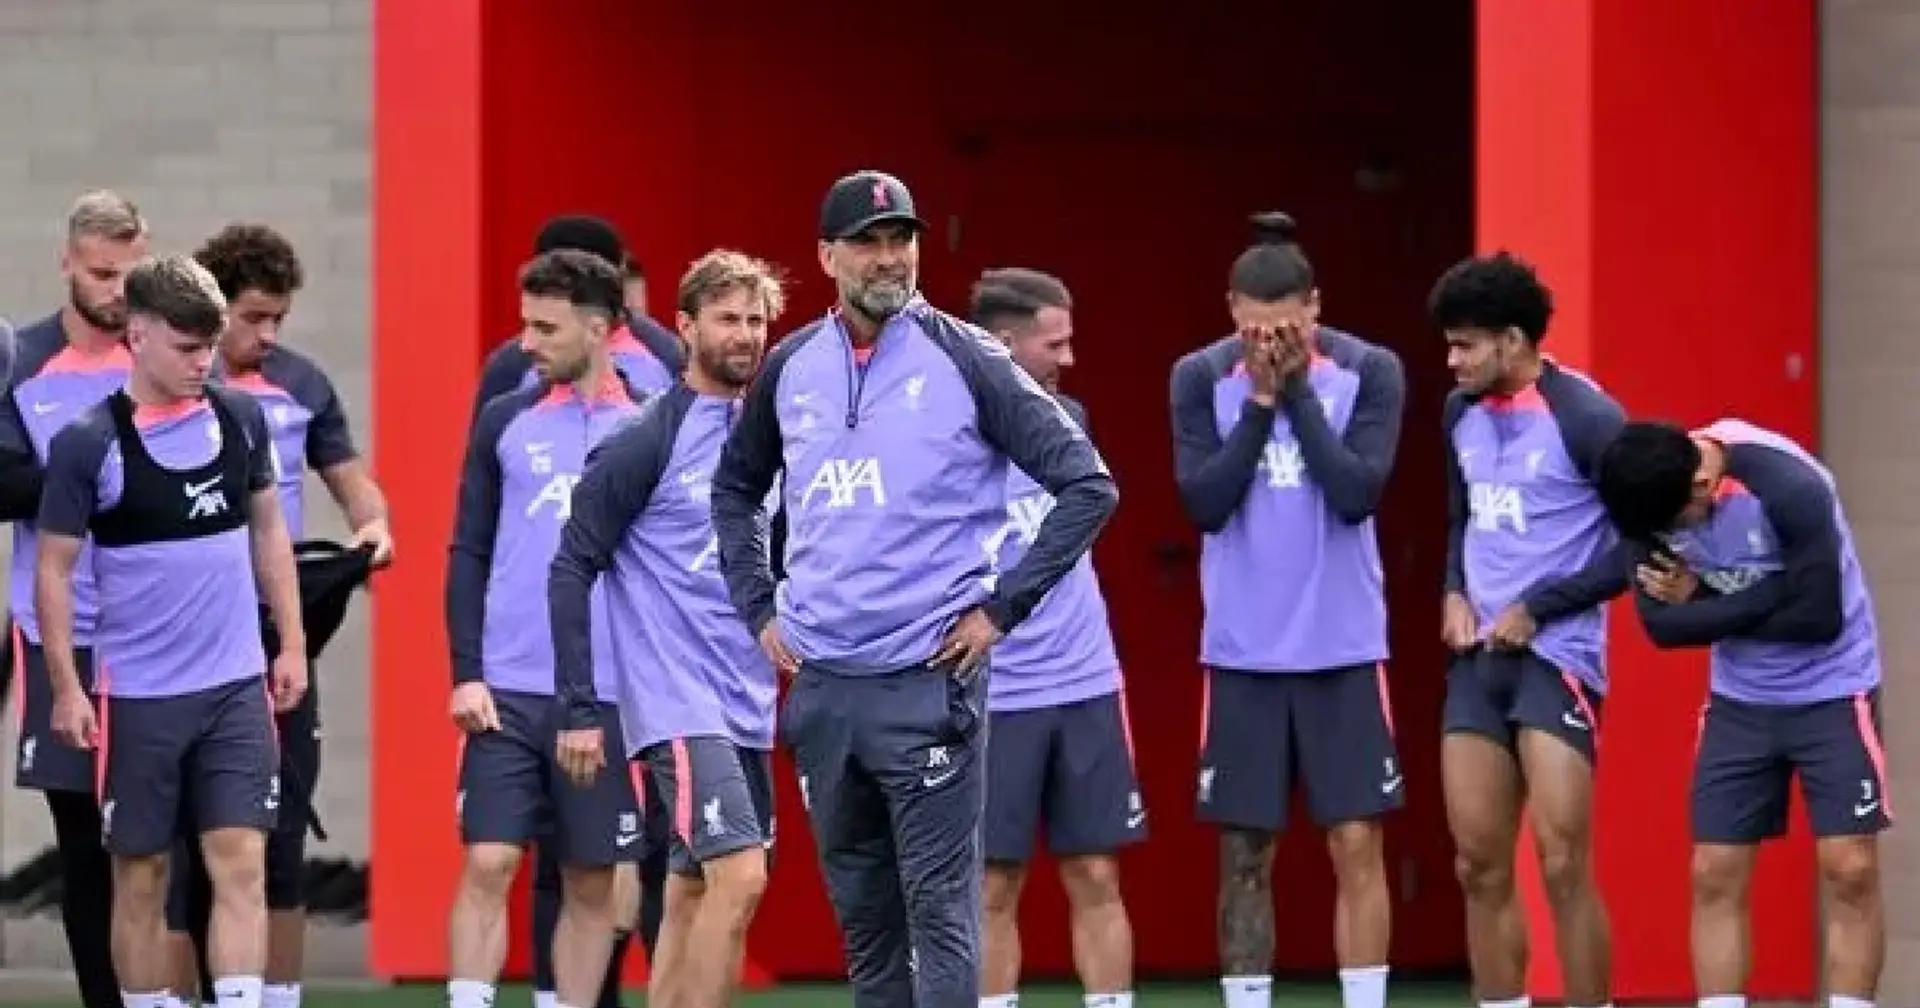 No Salah, Trent or Van Dijk: Liverpool's 23-man squad for Union SG clash revealed 